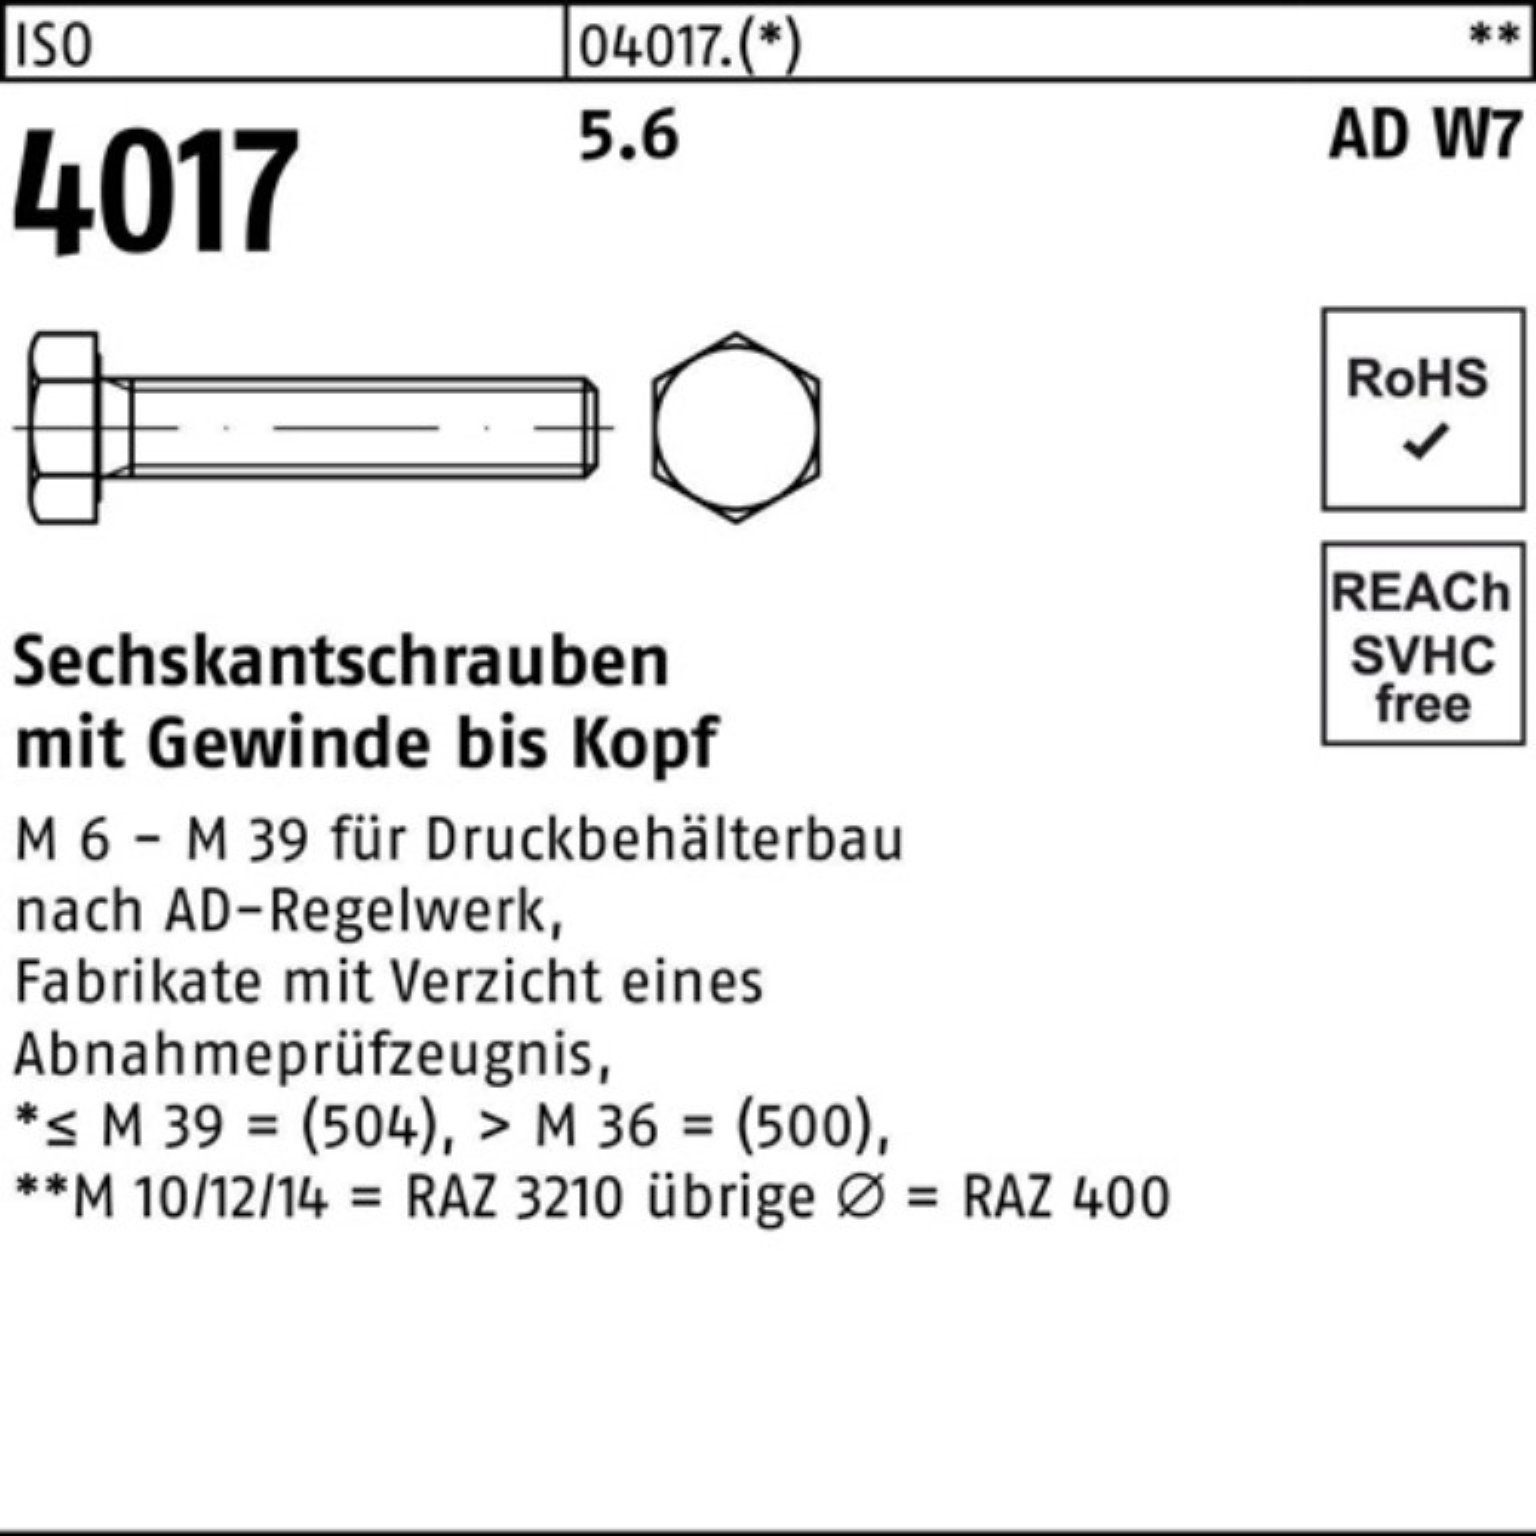 Bufab Sechskantschraube 100er VG AD Pack ISO 5.6 Stück 65 W7 25 M20x Sechskantschraube 4017 I